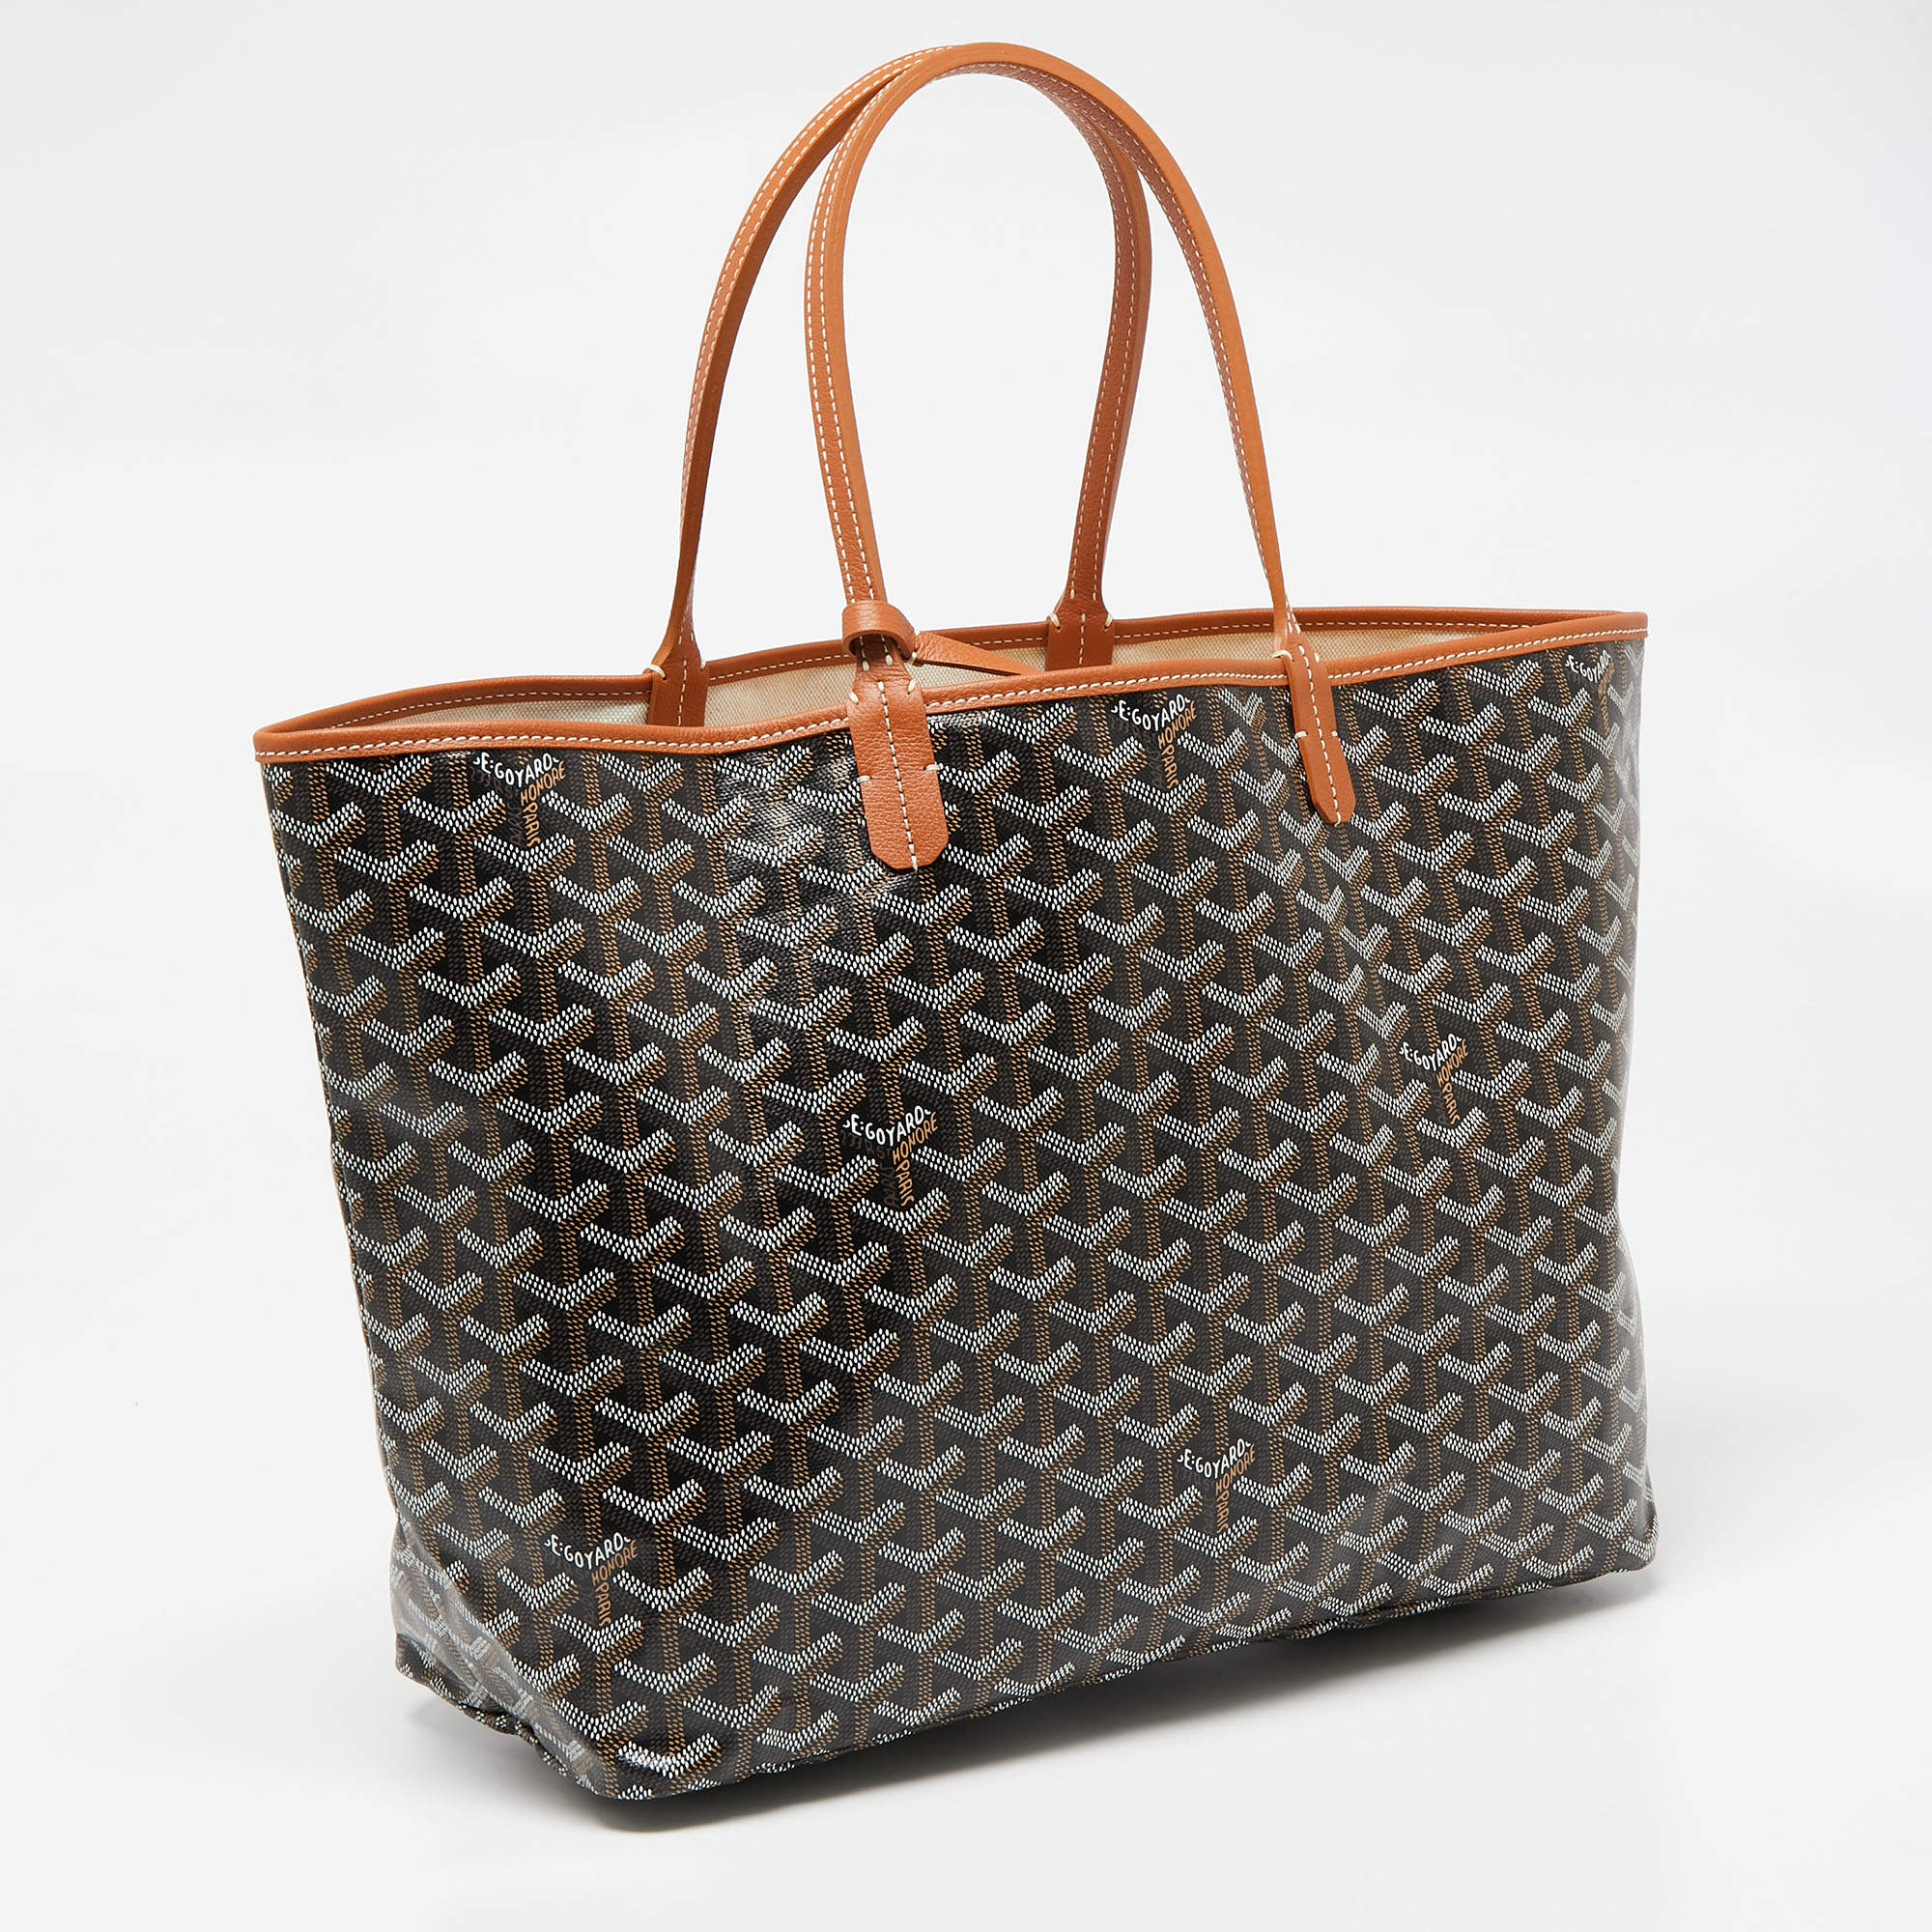 Shop GOYARD Saint Louis Canvas Blended Fabrics 2WAY Leather Elegant Style  Handbags by LifeinParis